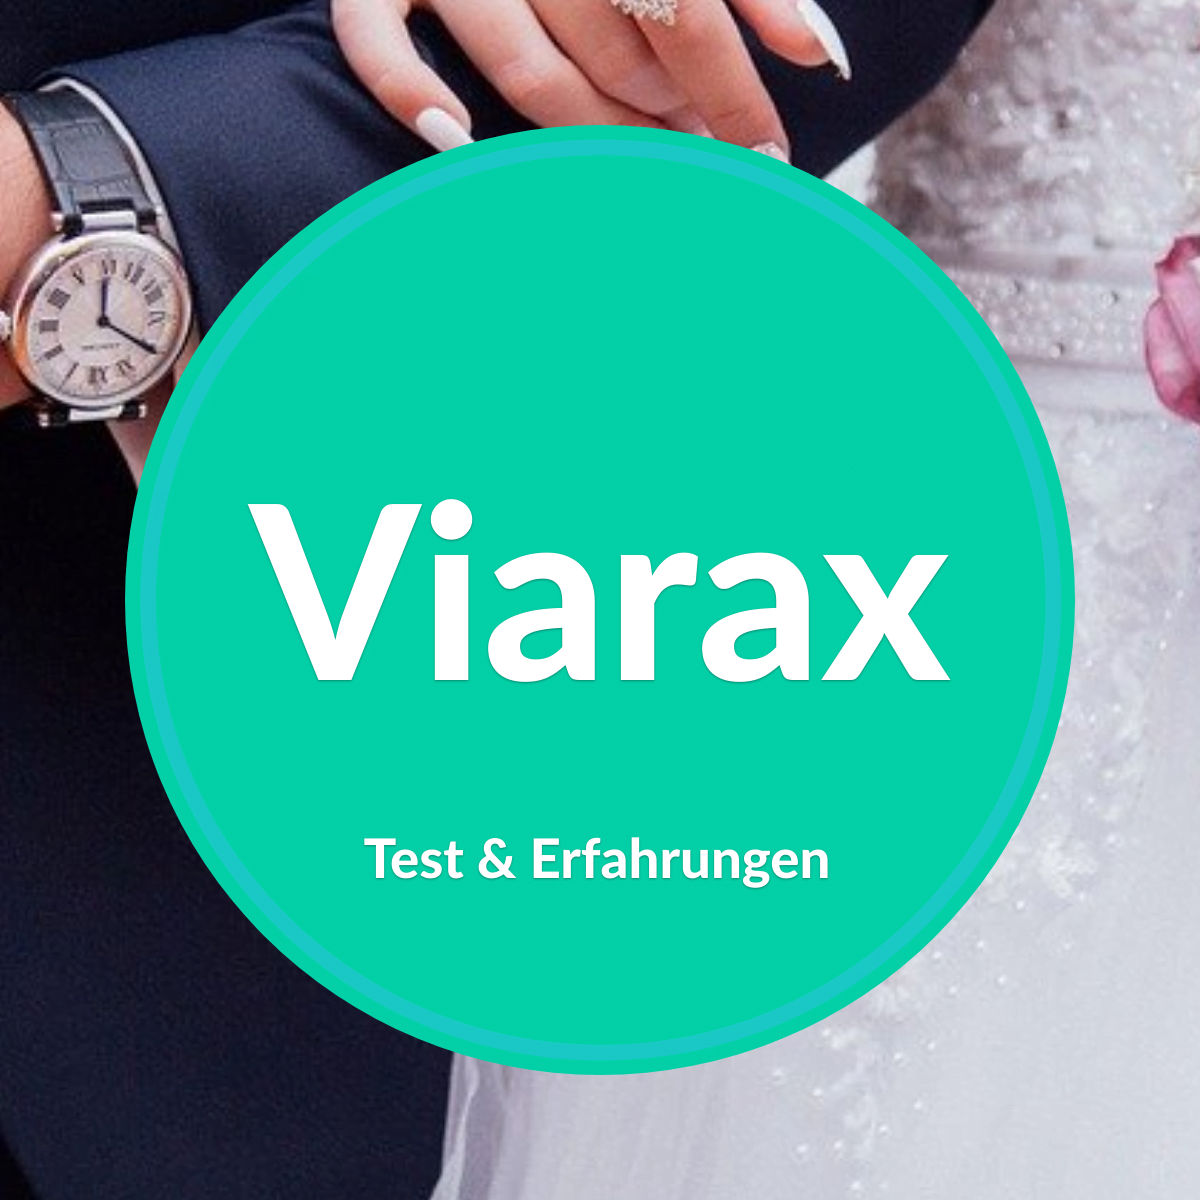 viarax test erfahrung